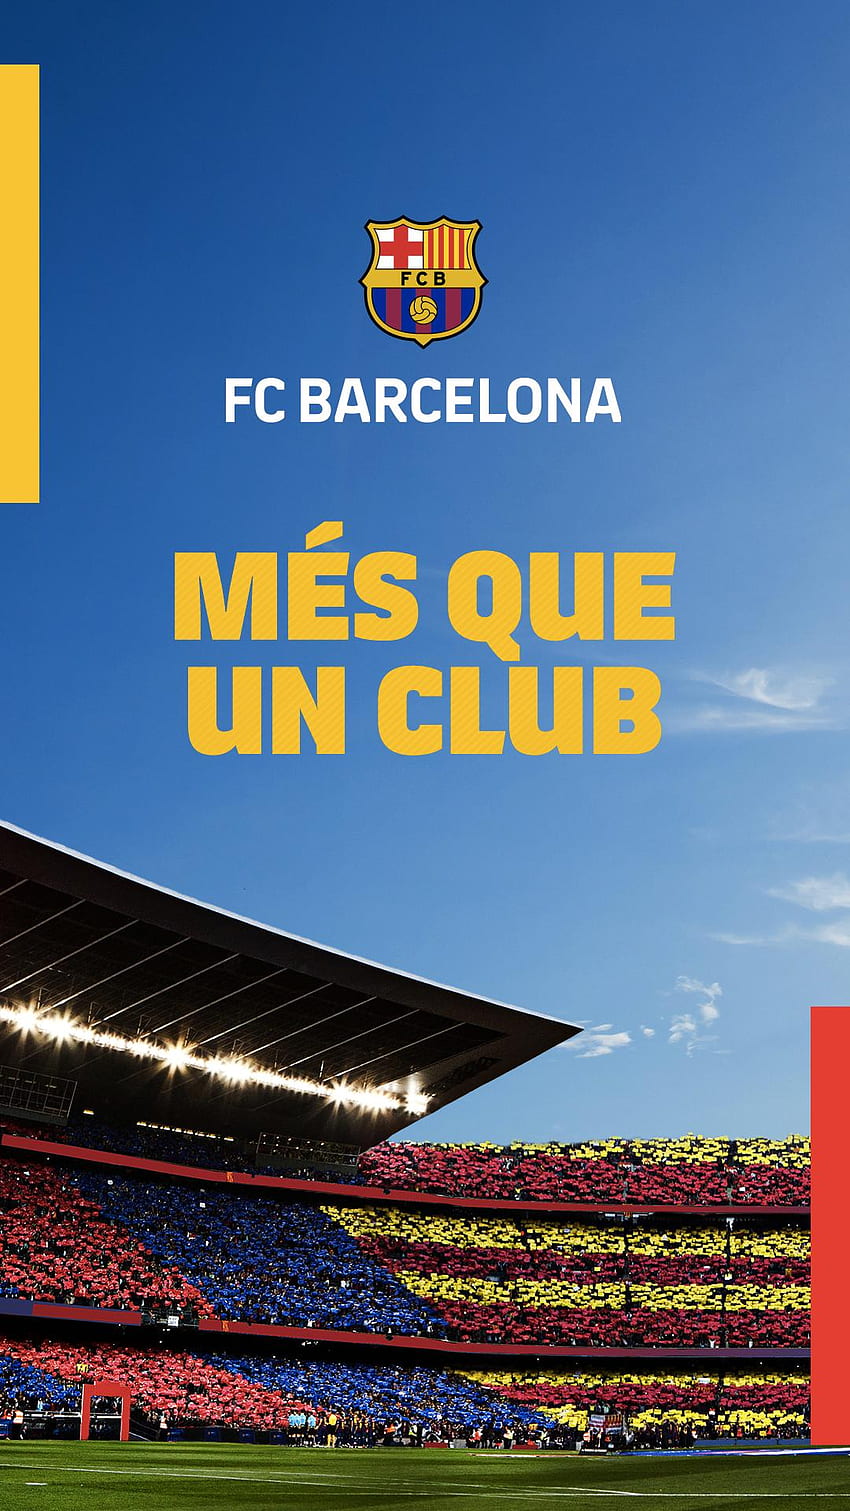 Camp Nou New 60 FC Barcelona Home Ground fondo de pantalla del teléfono